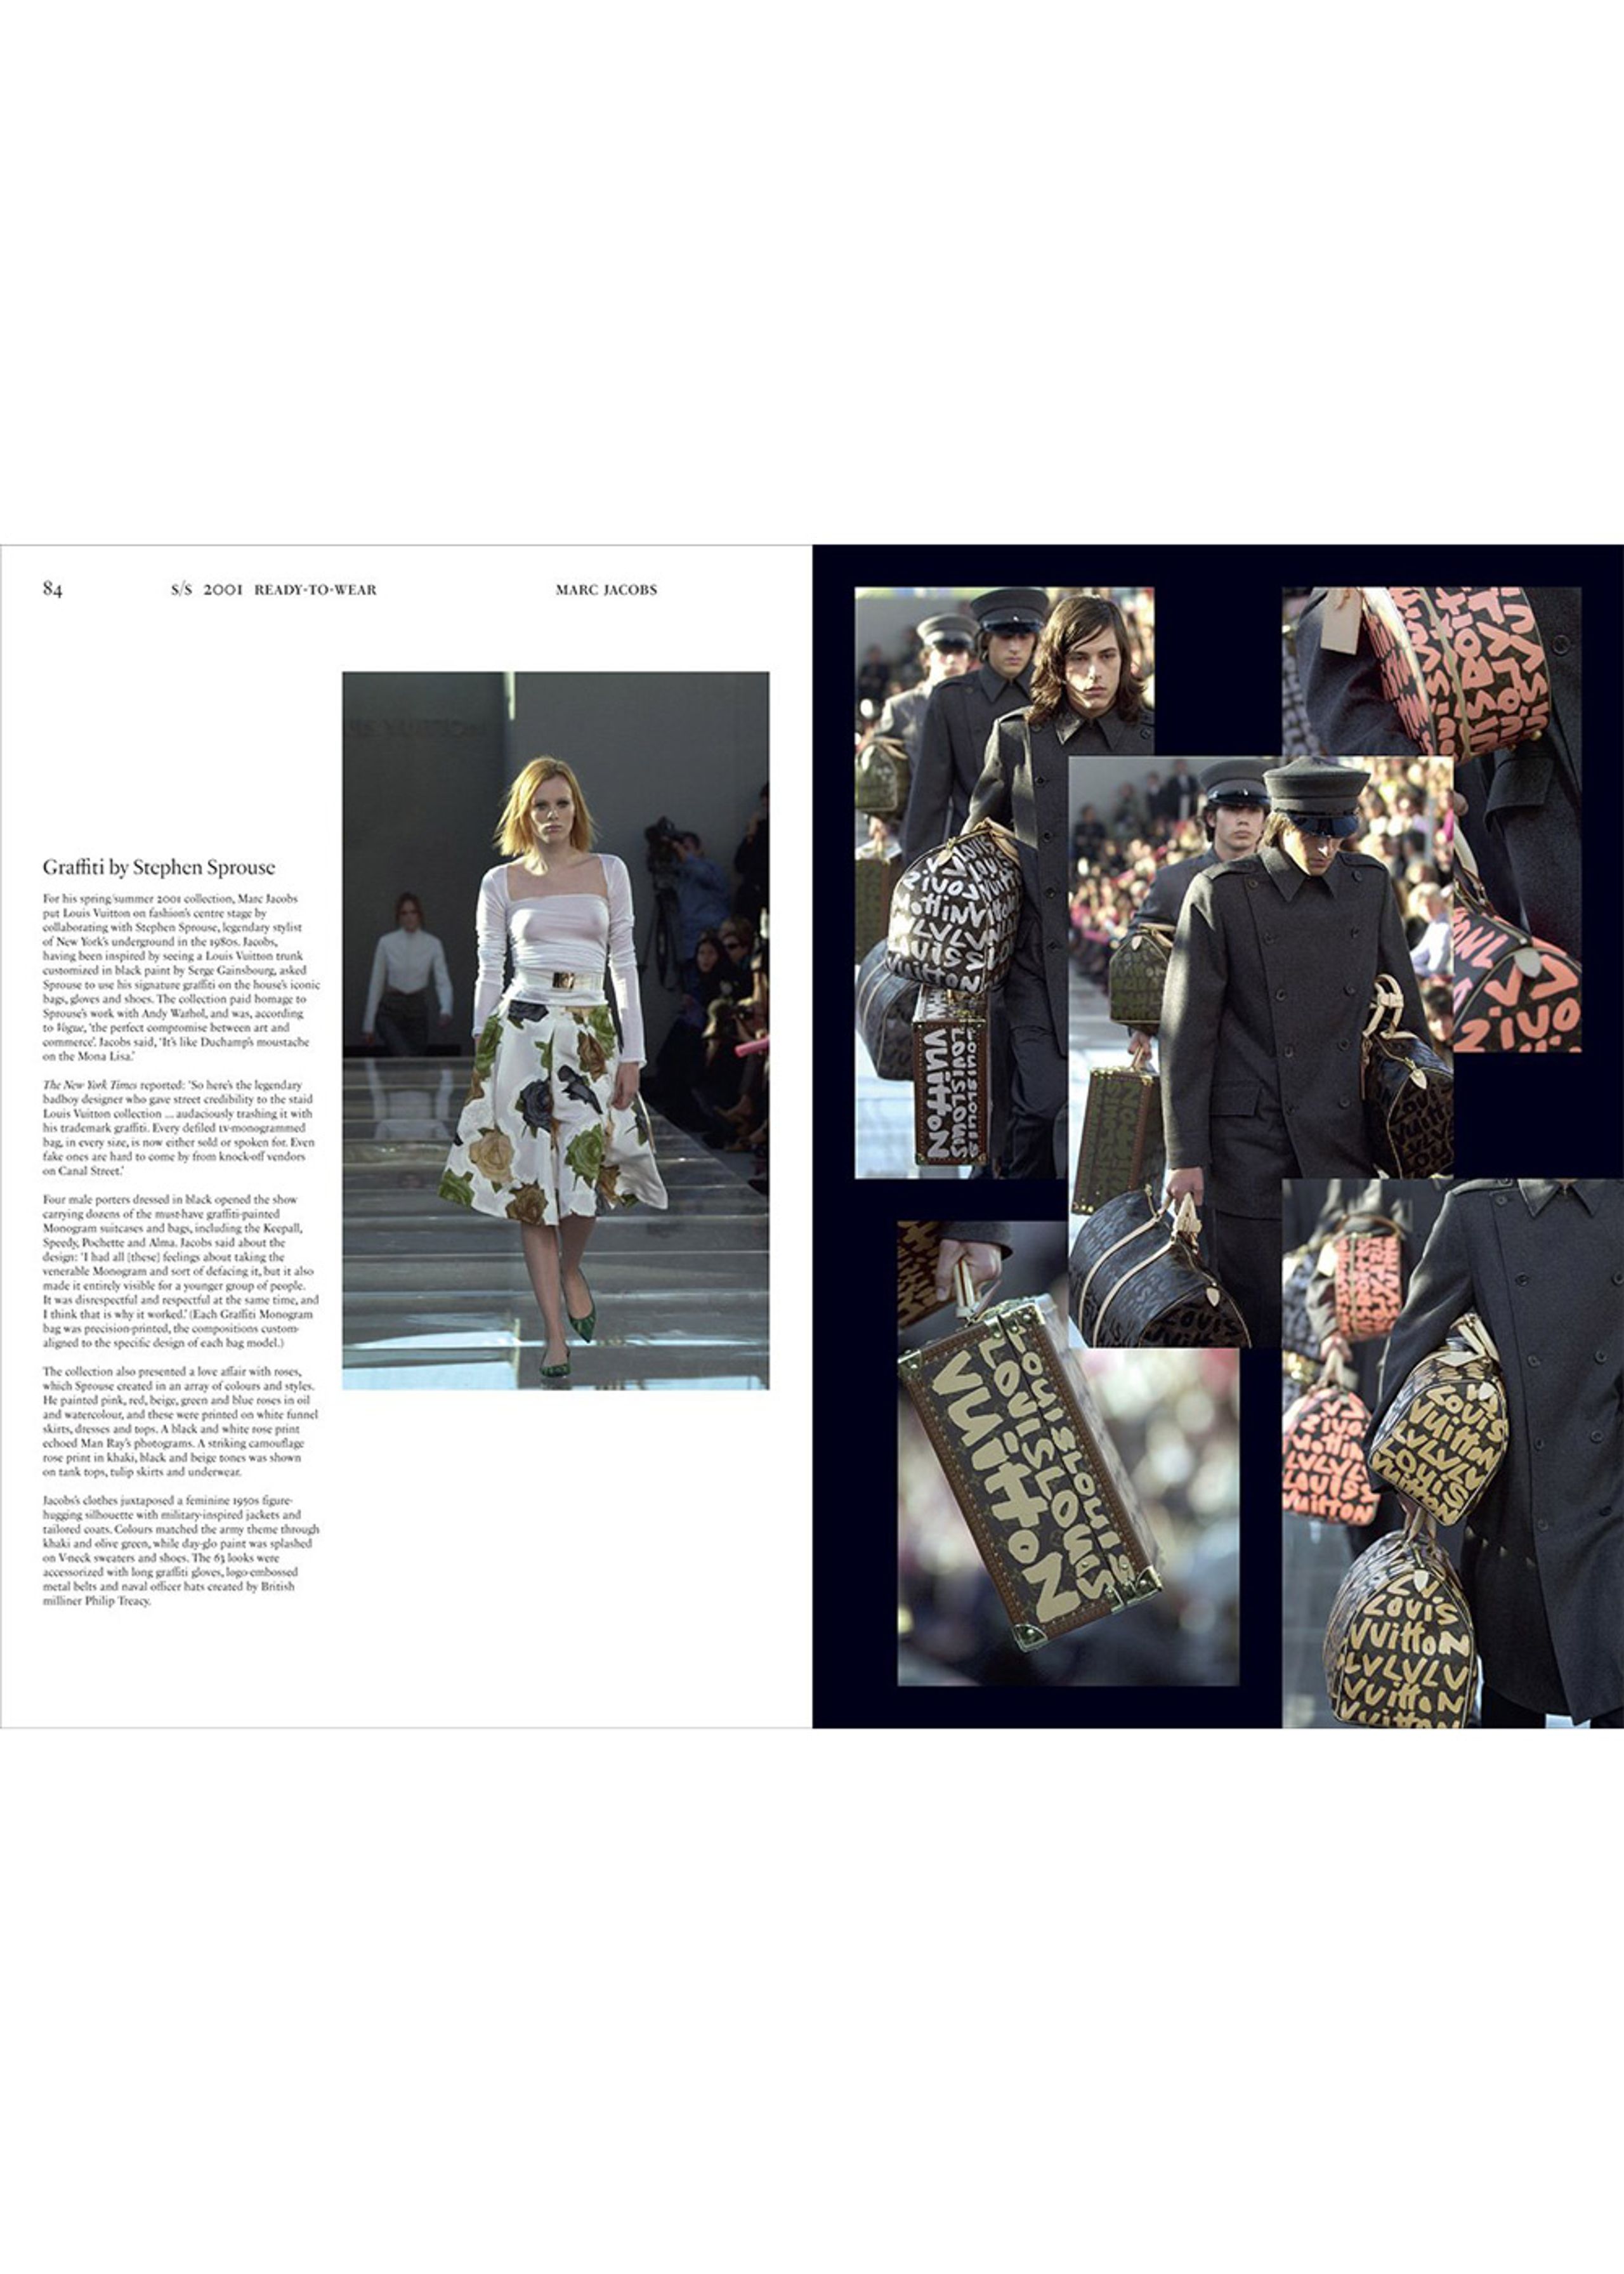 Descubrimos la colección de libros 'Travel Book' de Louis Vuitton - Fashion  - Mixmag Spain